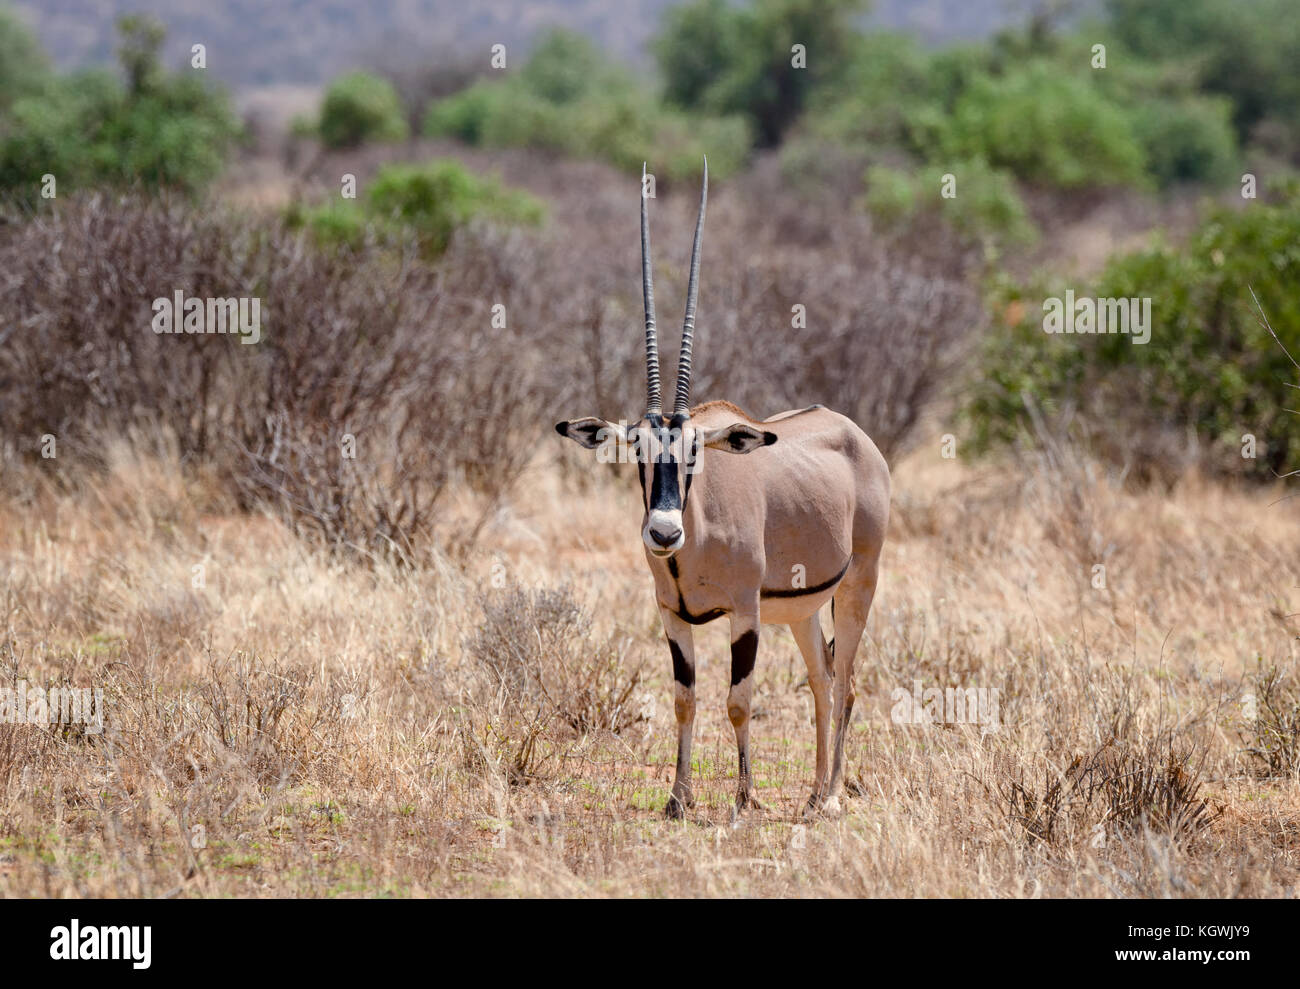 A Gemsbok standing in a dry, bushy area. Stock Photo